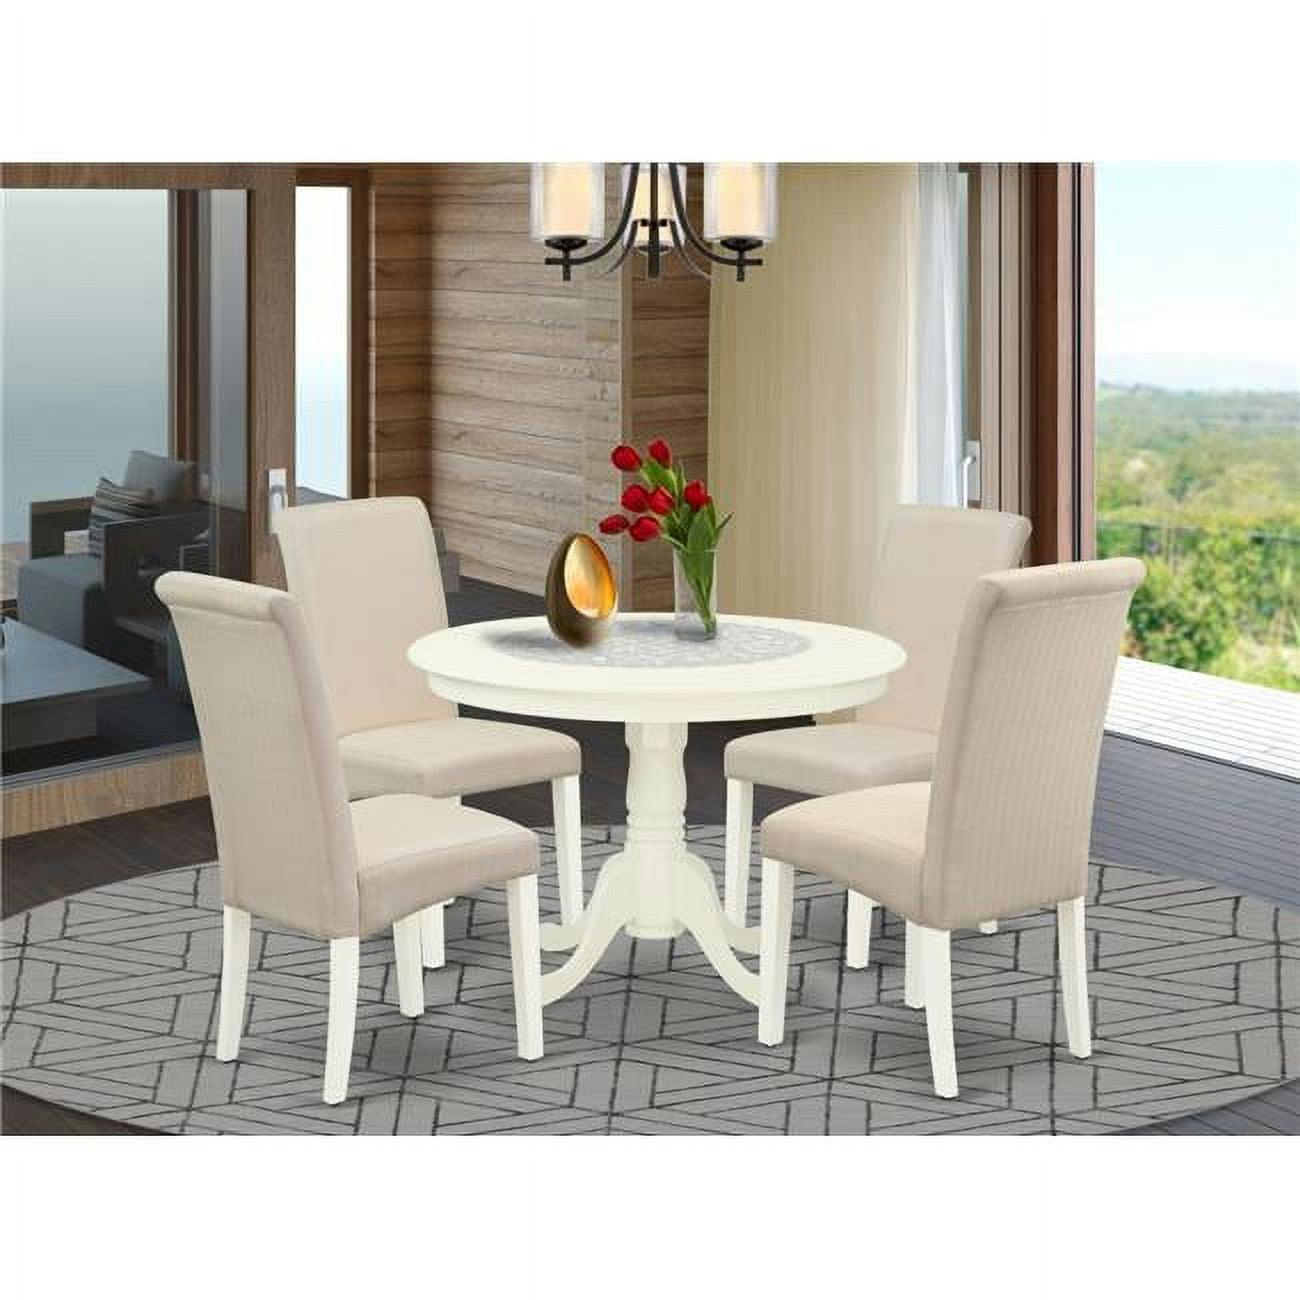 Linen White Round Table & Cream Parson Chairs 5-Piece Dining Set